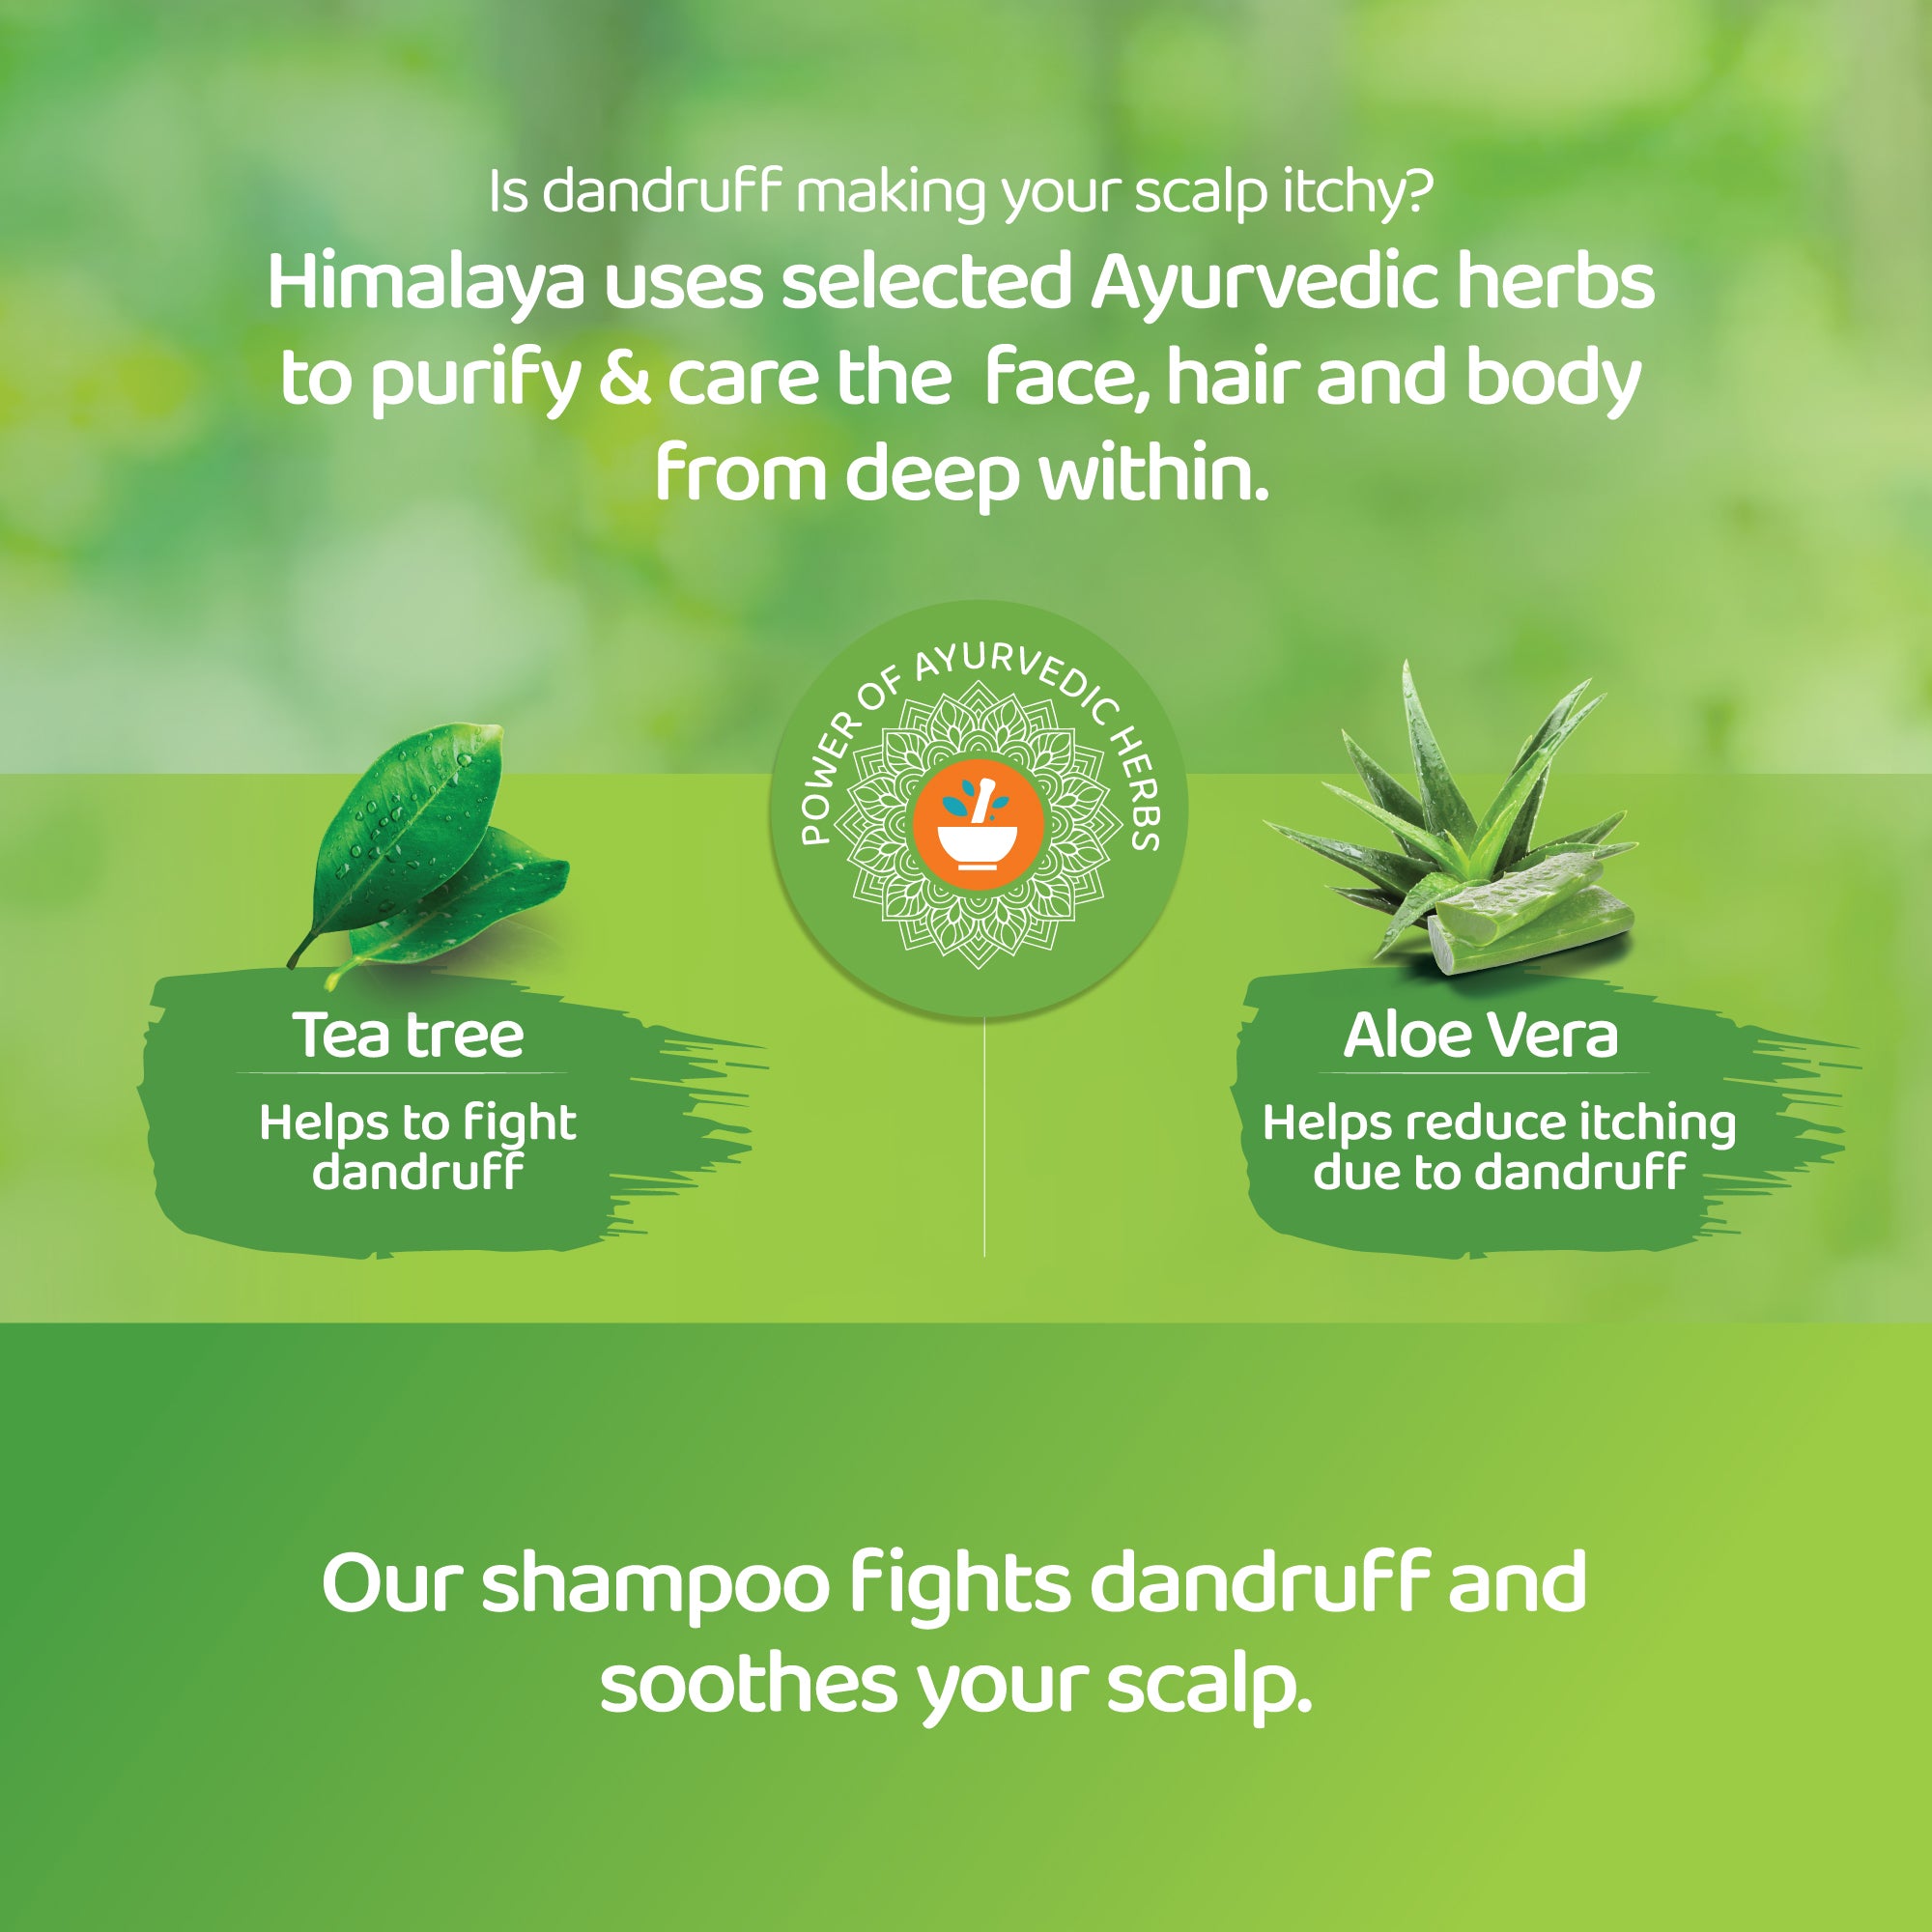 Himalaya Anti-Dandruff Shampoo - Soothing & Moisturizing - 400 ml